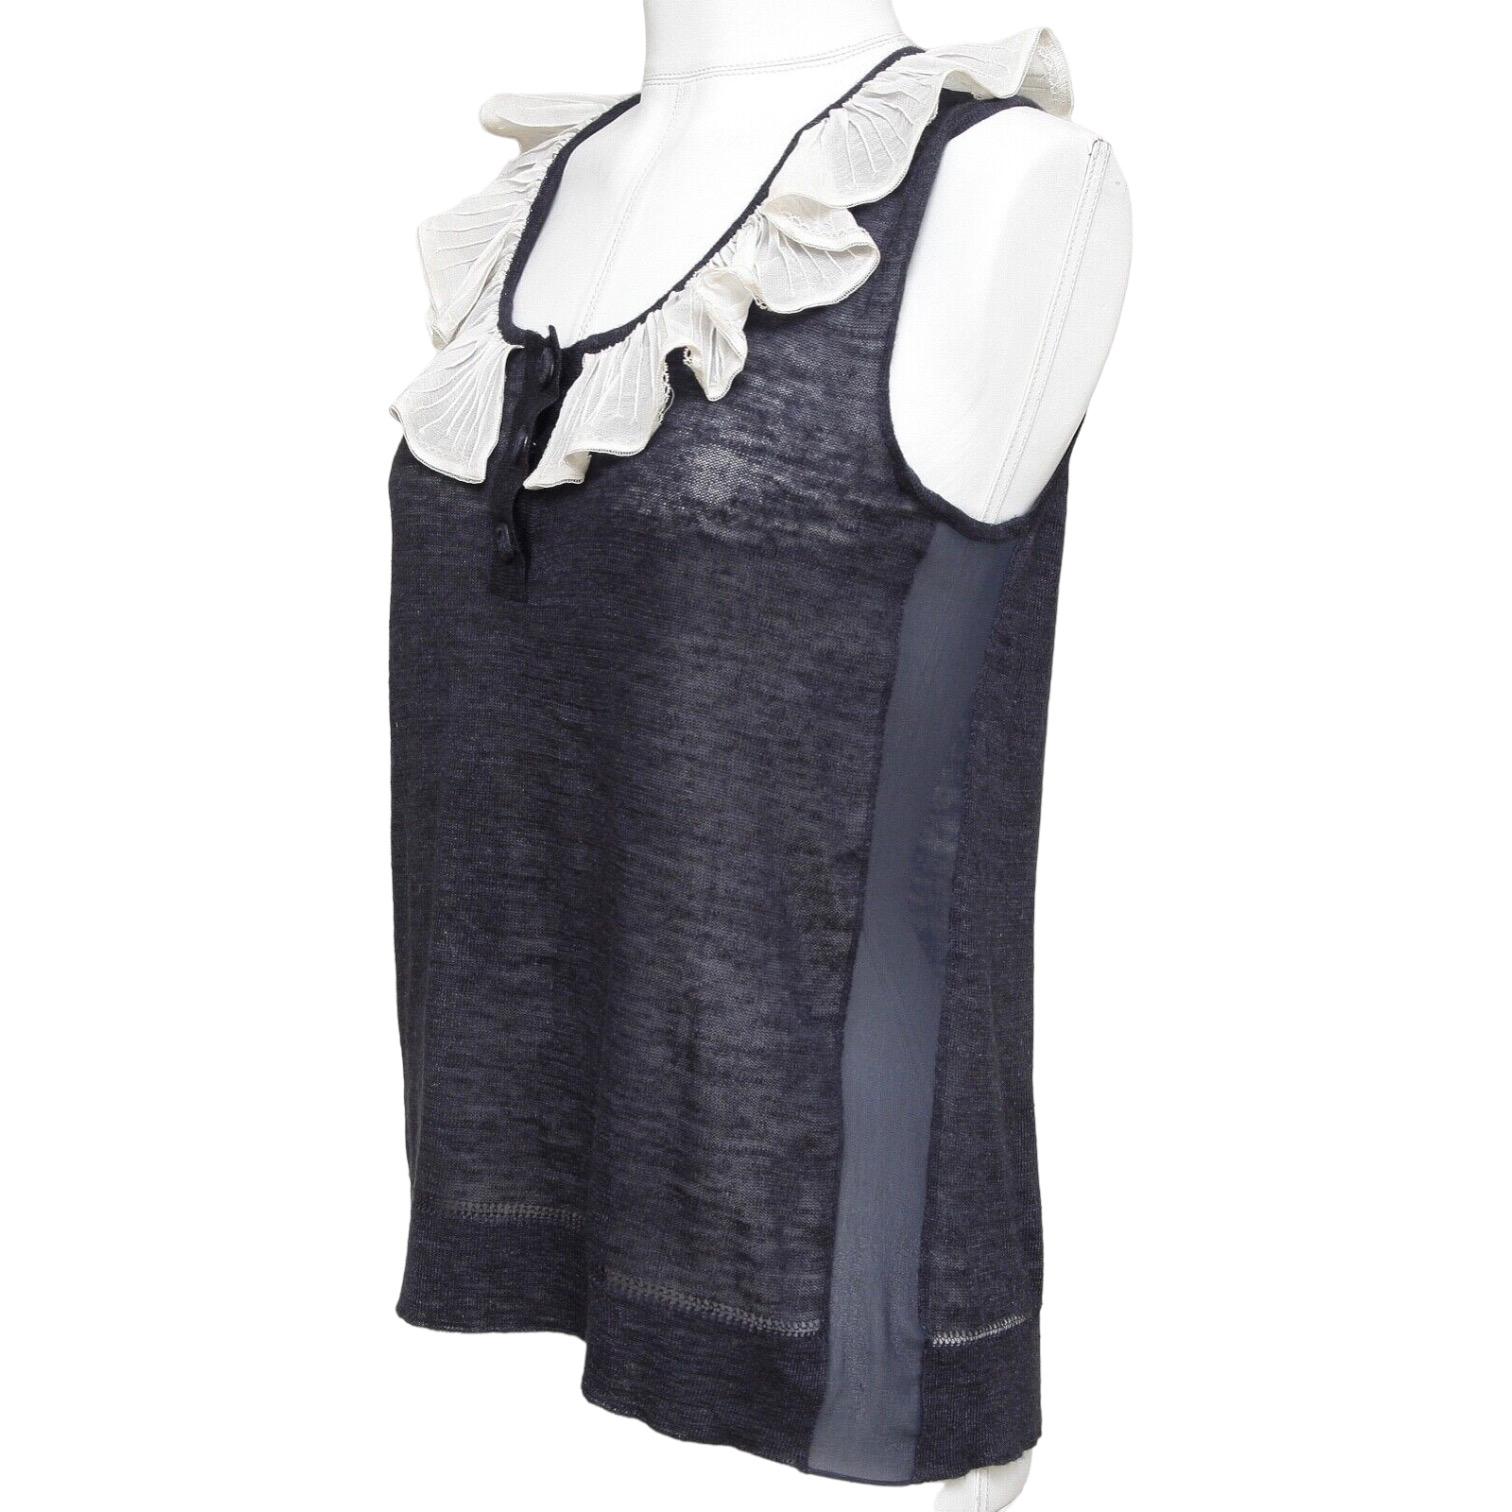 Black CHLOE Sleeveless Top Shirt Sleeveless Navy Ivory Ruffle Henley XS 2007 For Sale